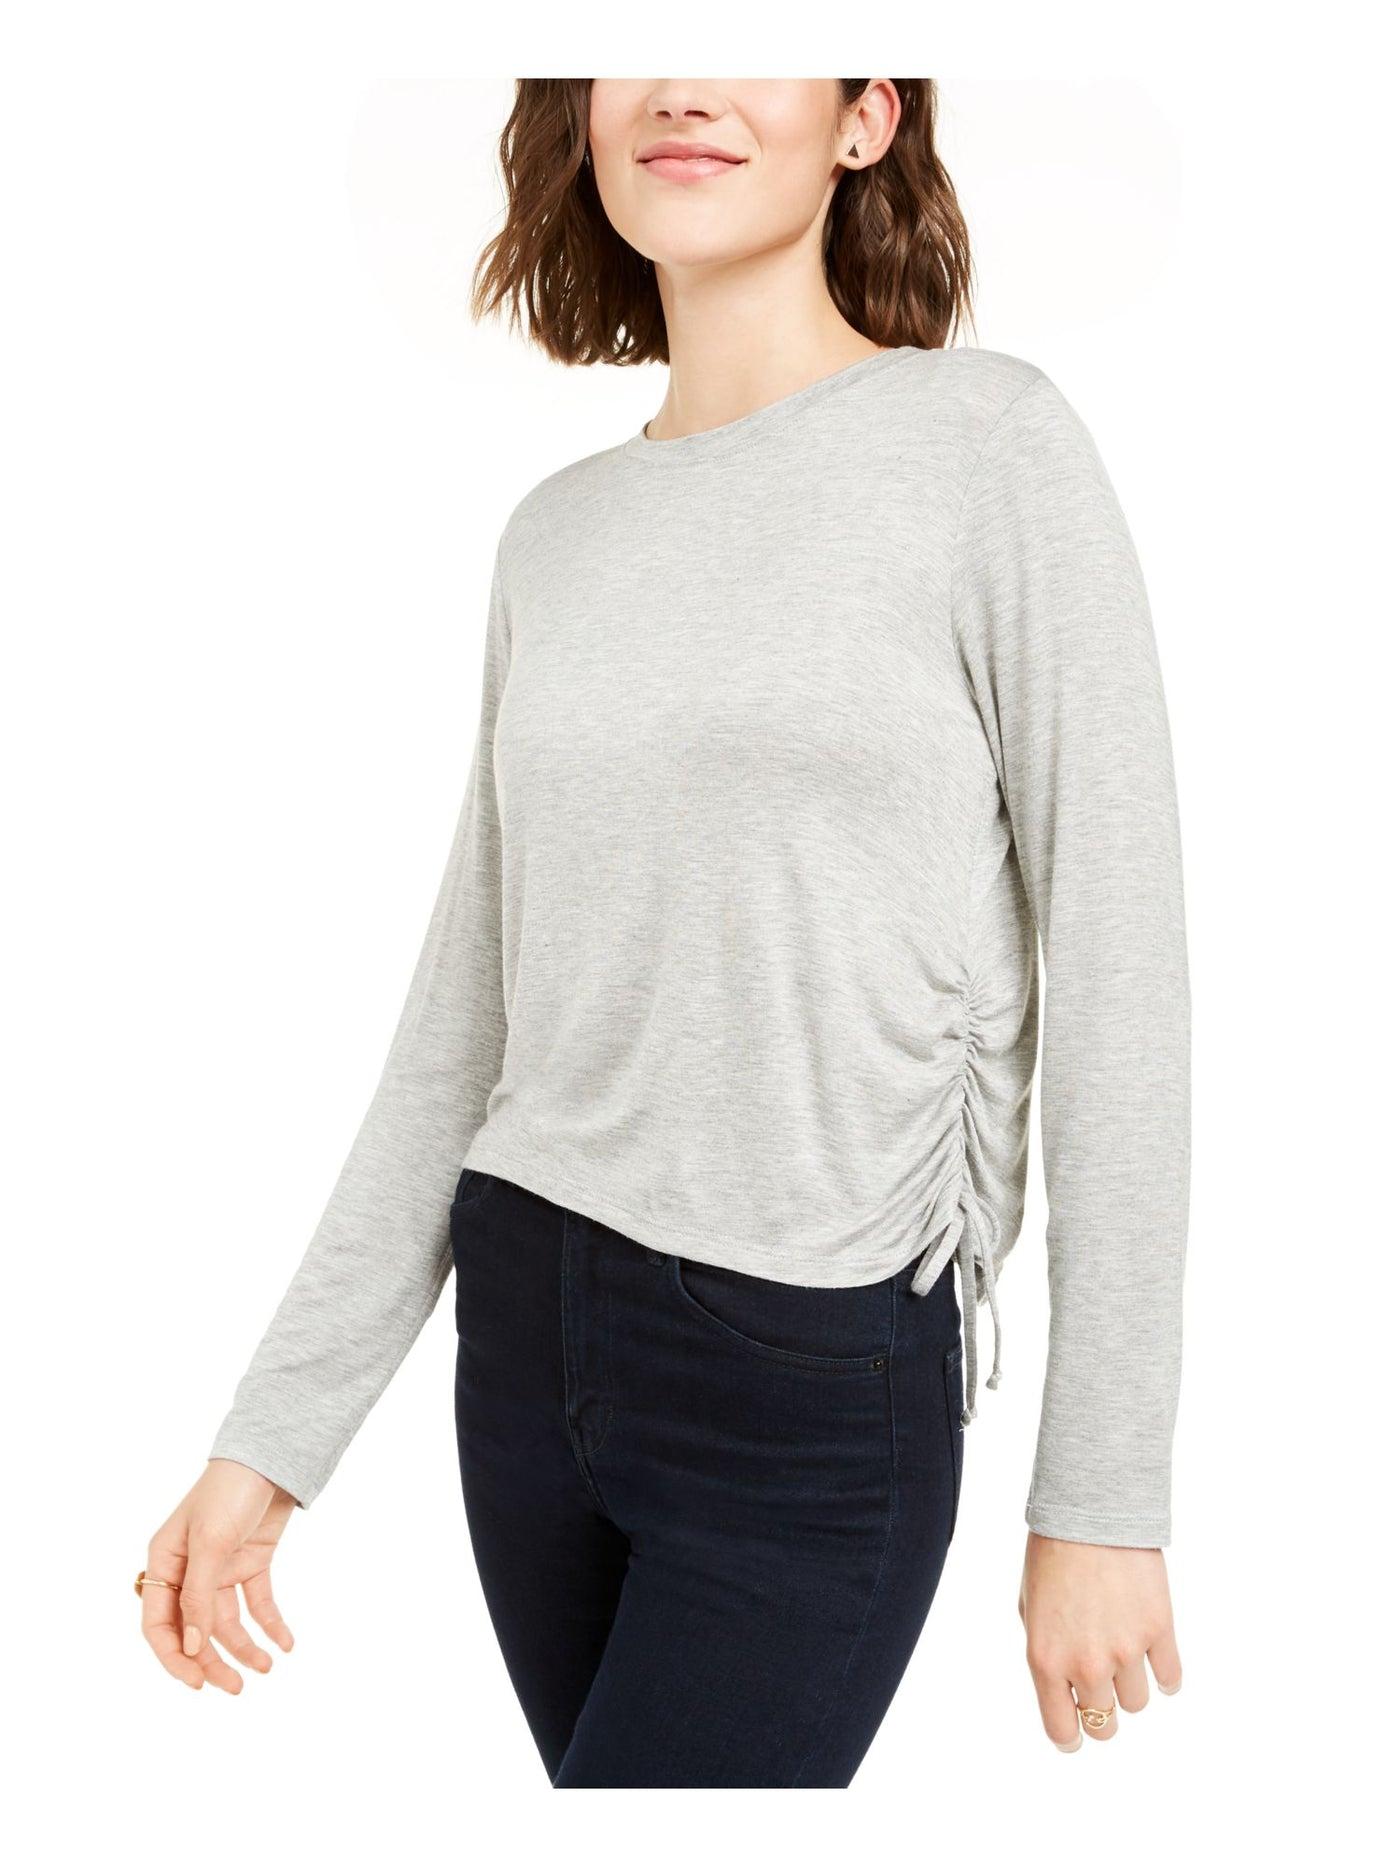 REBELLIOUS ONE Womens Gray Long Sleeve Jewel Neck Sweater Juniors M